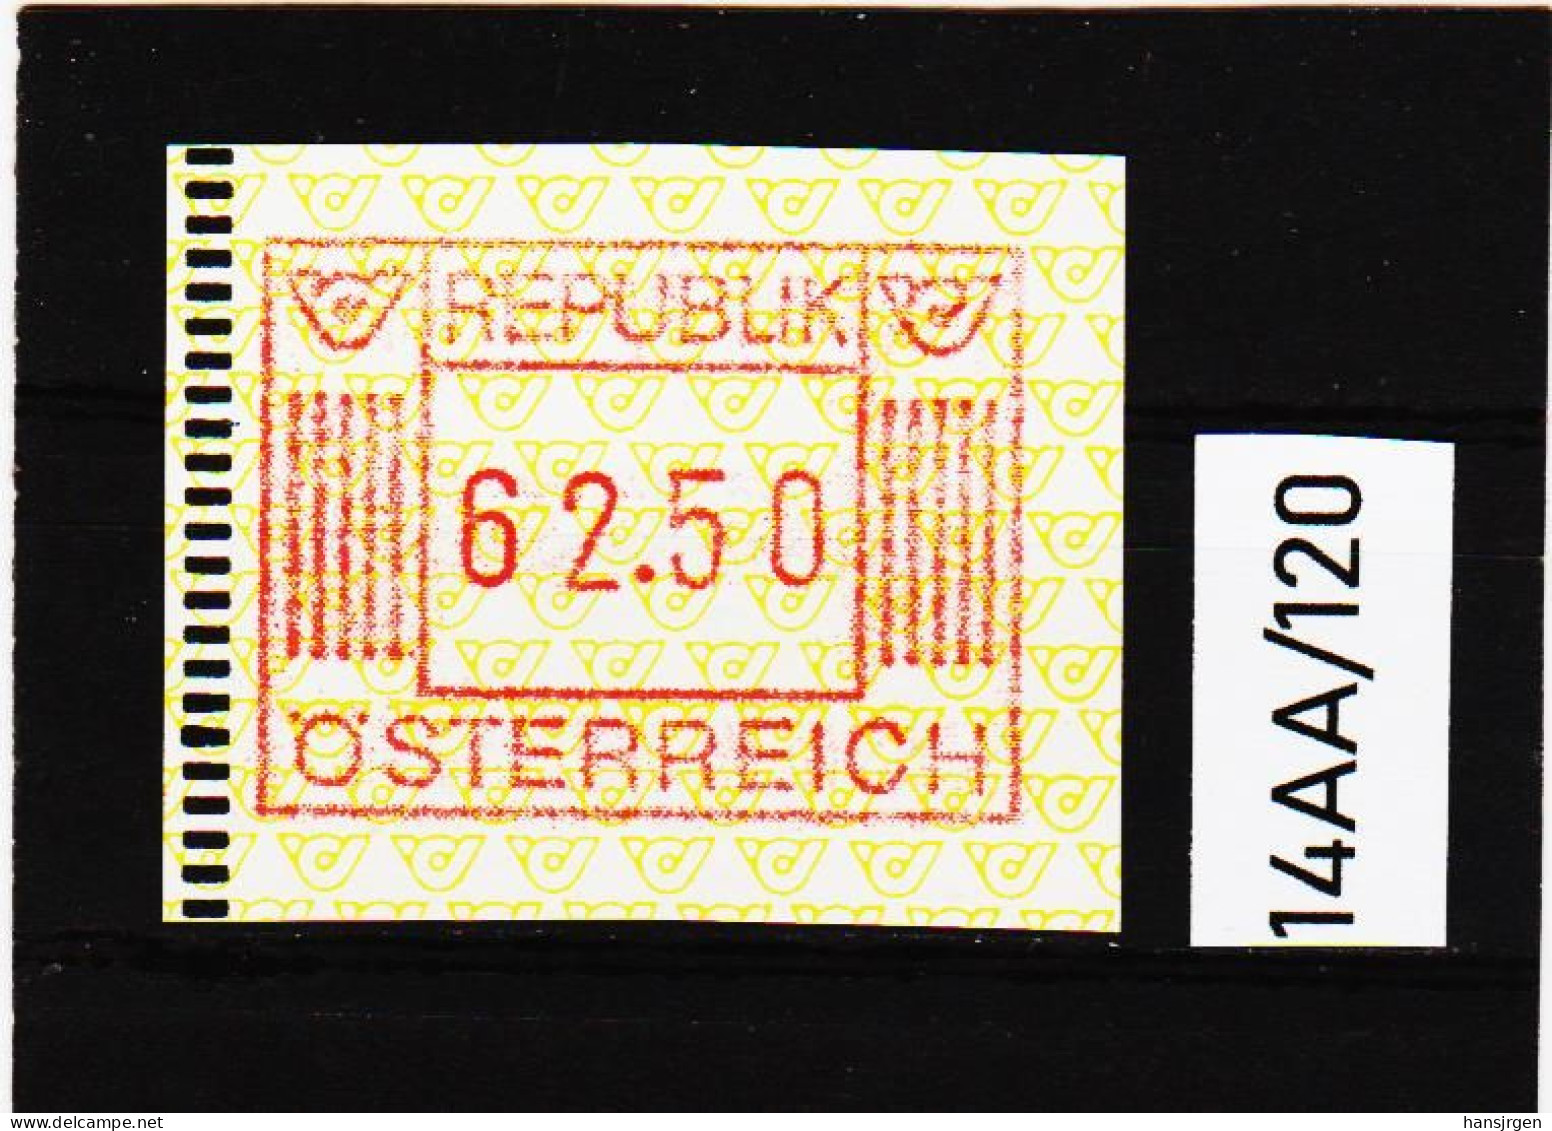 14AA/120  ÖSTERREICH 1983 AUTOMATENMARKEN  A N K  1. AUSGABE  62,50 SCHILLING   ** Postfrisch - Timbres De Distributeurs [ATM]